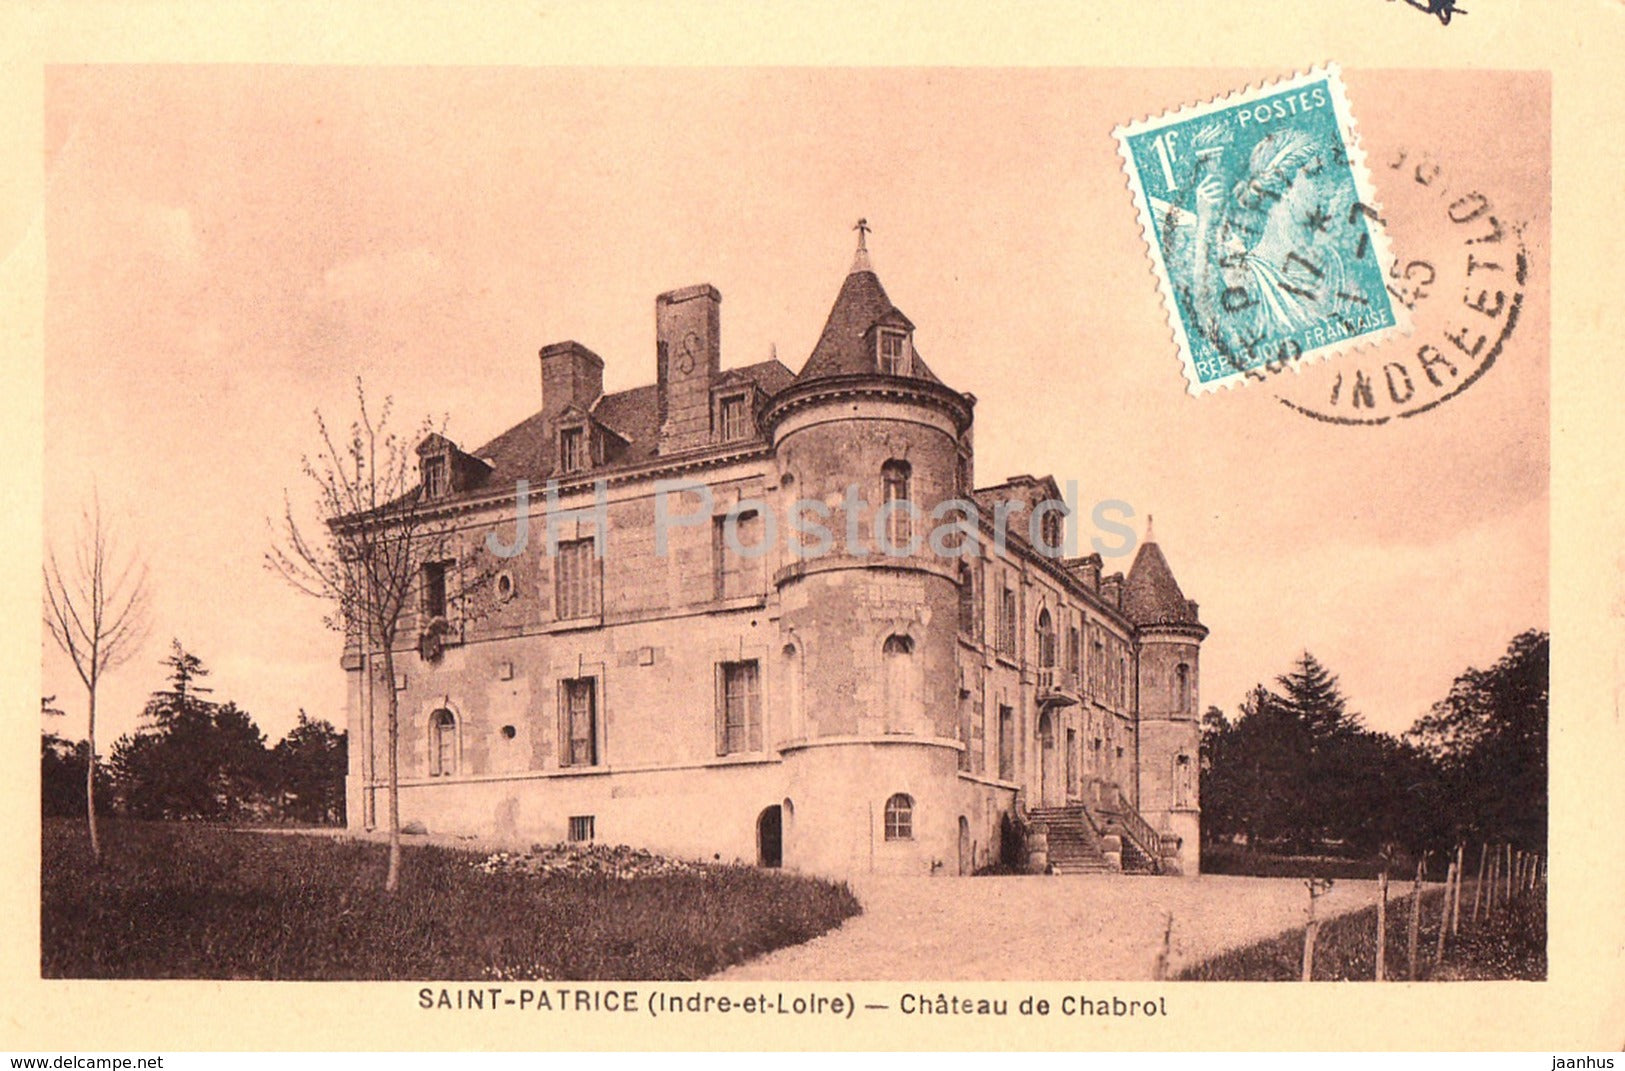 Saint Patrice - Chateau de Chabrol - castle - 26 - old postcard - 1945 - France - used - JH Postcards